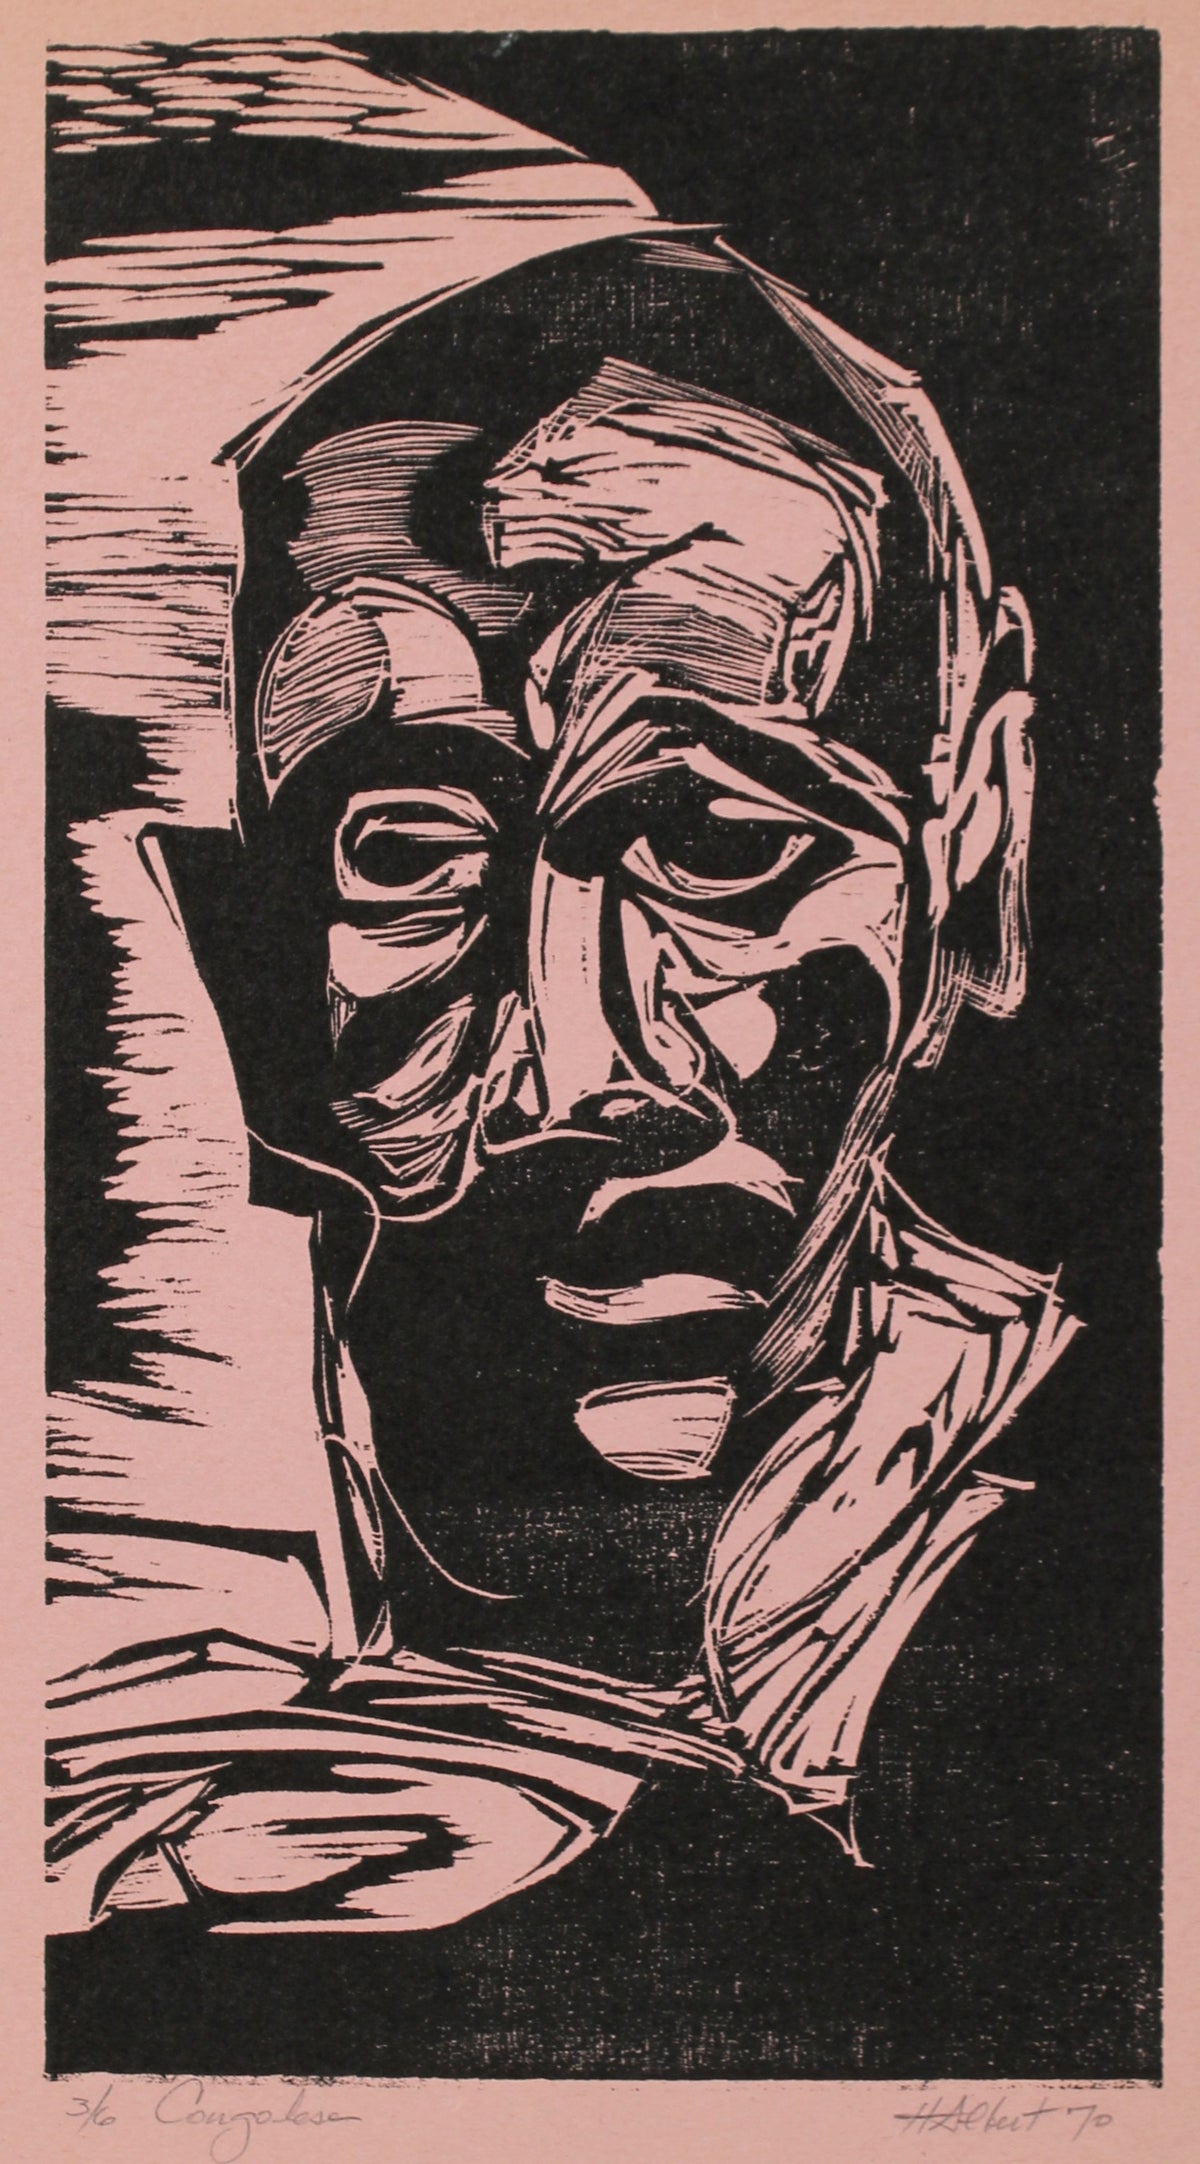 &lt;i&gt;Congolese&lt;/i&gt;&lt;br&gt;1970 Woodcut on Paper&lt;br&gt;&lt;br&gt;#A0432